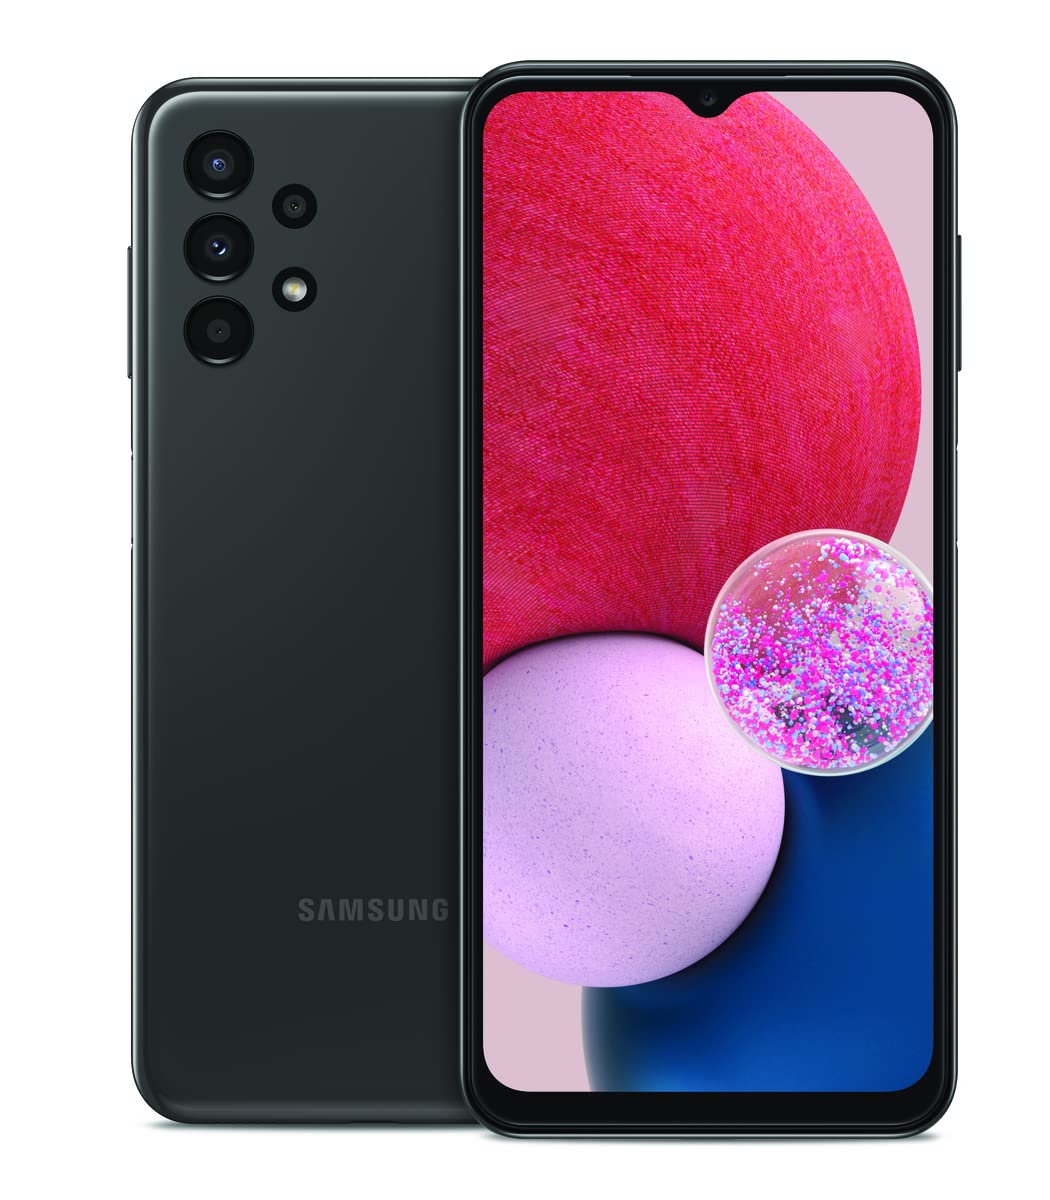 Samsung Galaxy A13 LTE 手机，工厂解锁 Android 智能手机，32GB，多镜头摄像头，Infinity-V HD+ 显示屏，电池寿命长，可扩展存储，美国版，黑色